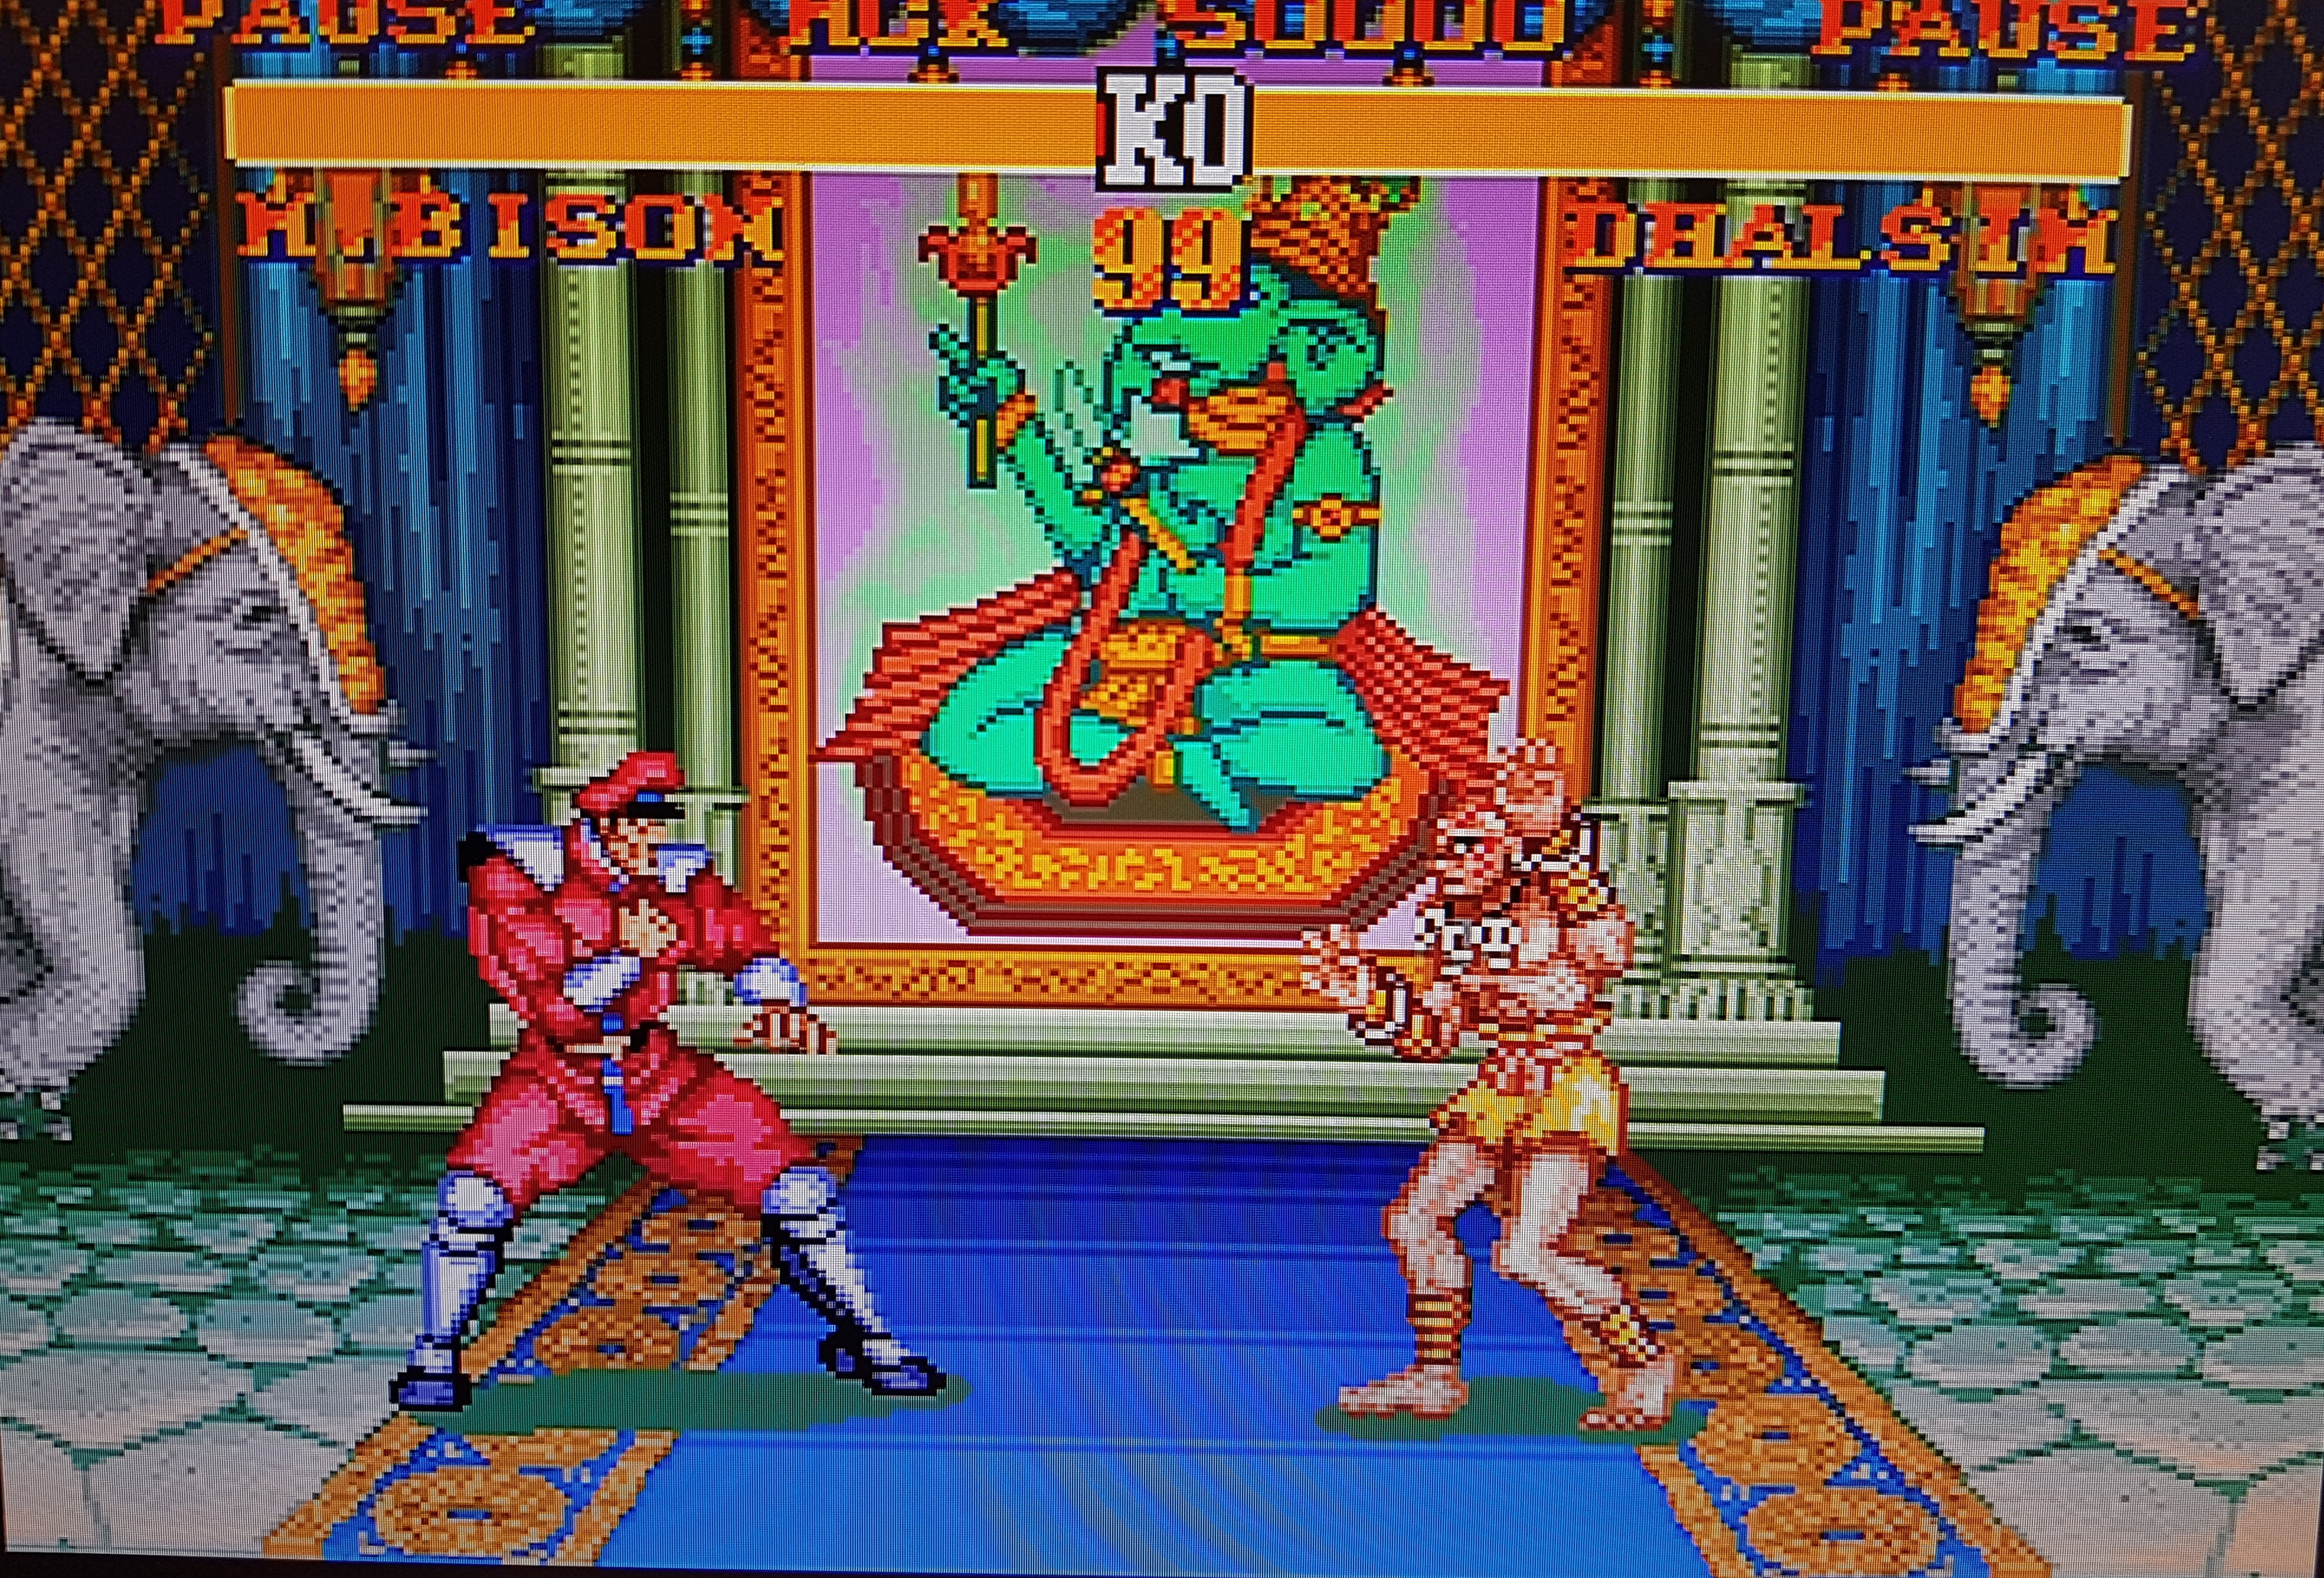 Street Fighter II Turbo on the SNES